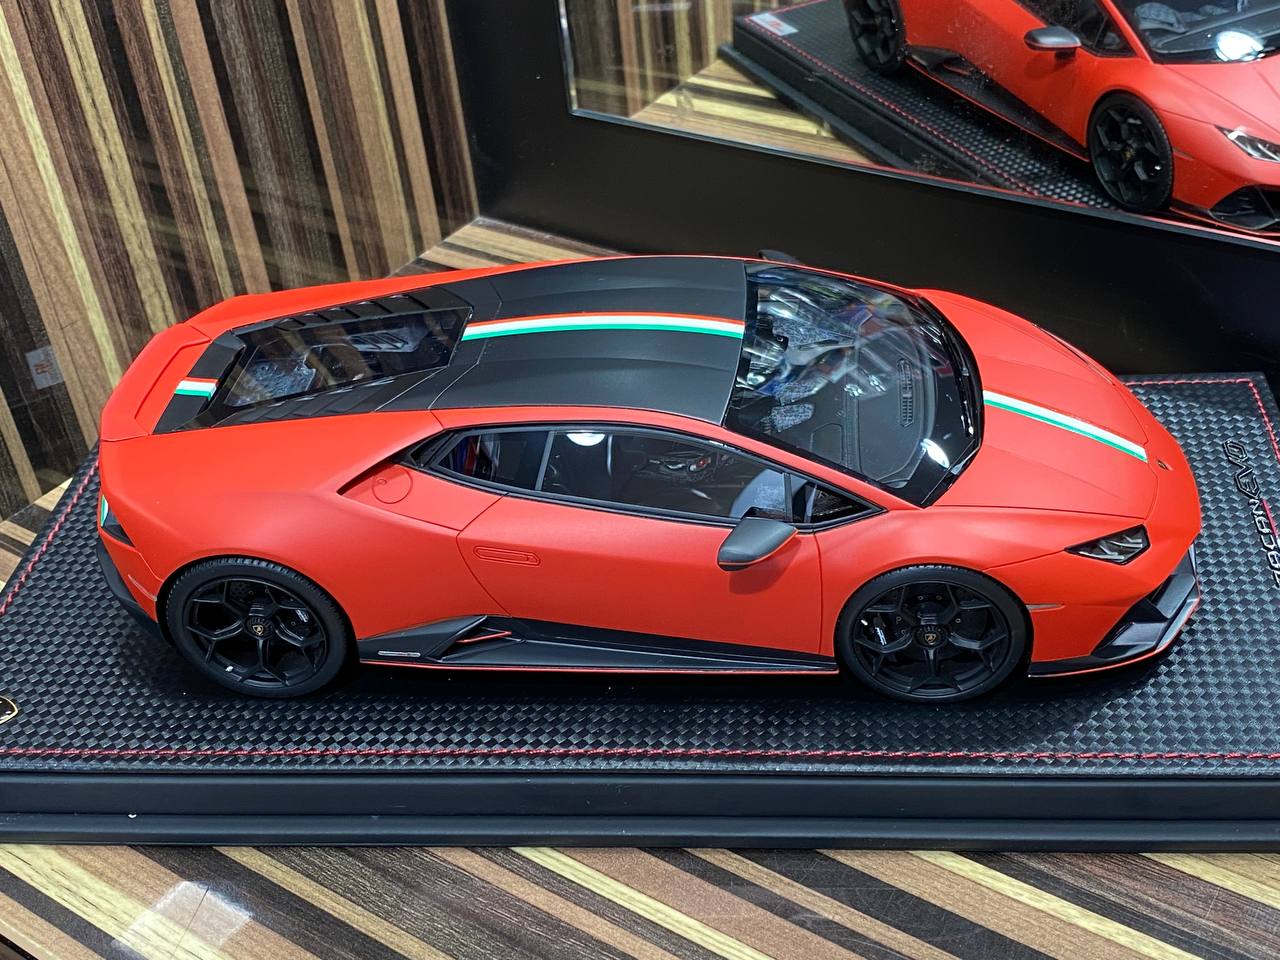 1/18 Resin Lamborghini Huracan EVO Orange Model car by MR